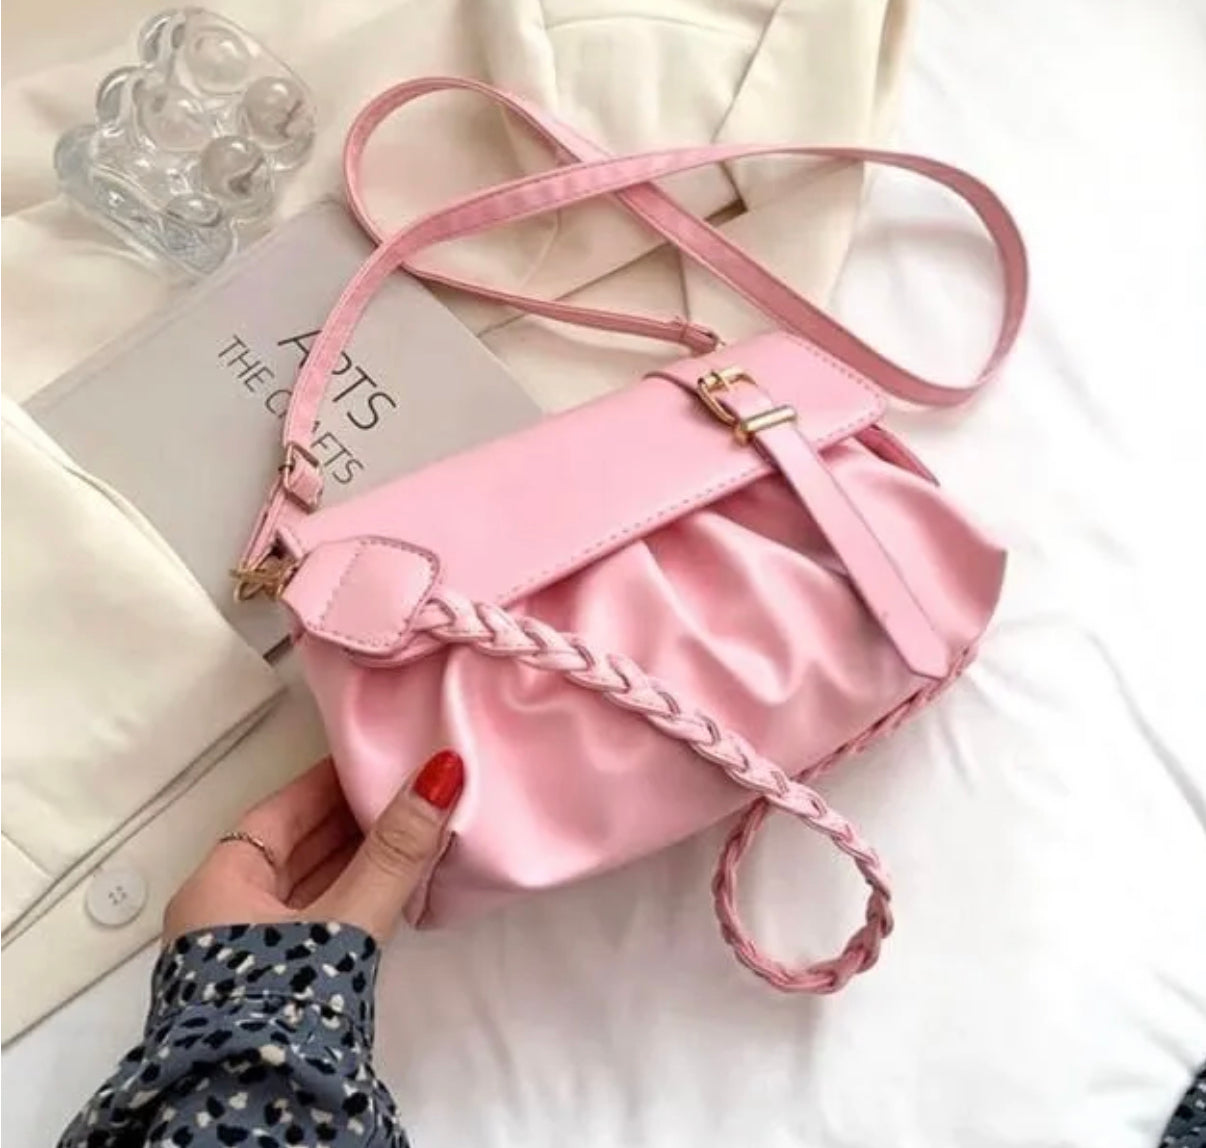 Bag/ satchel